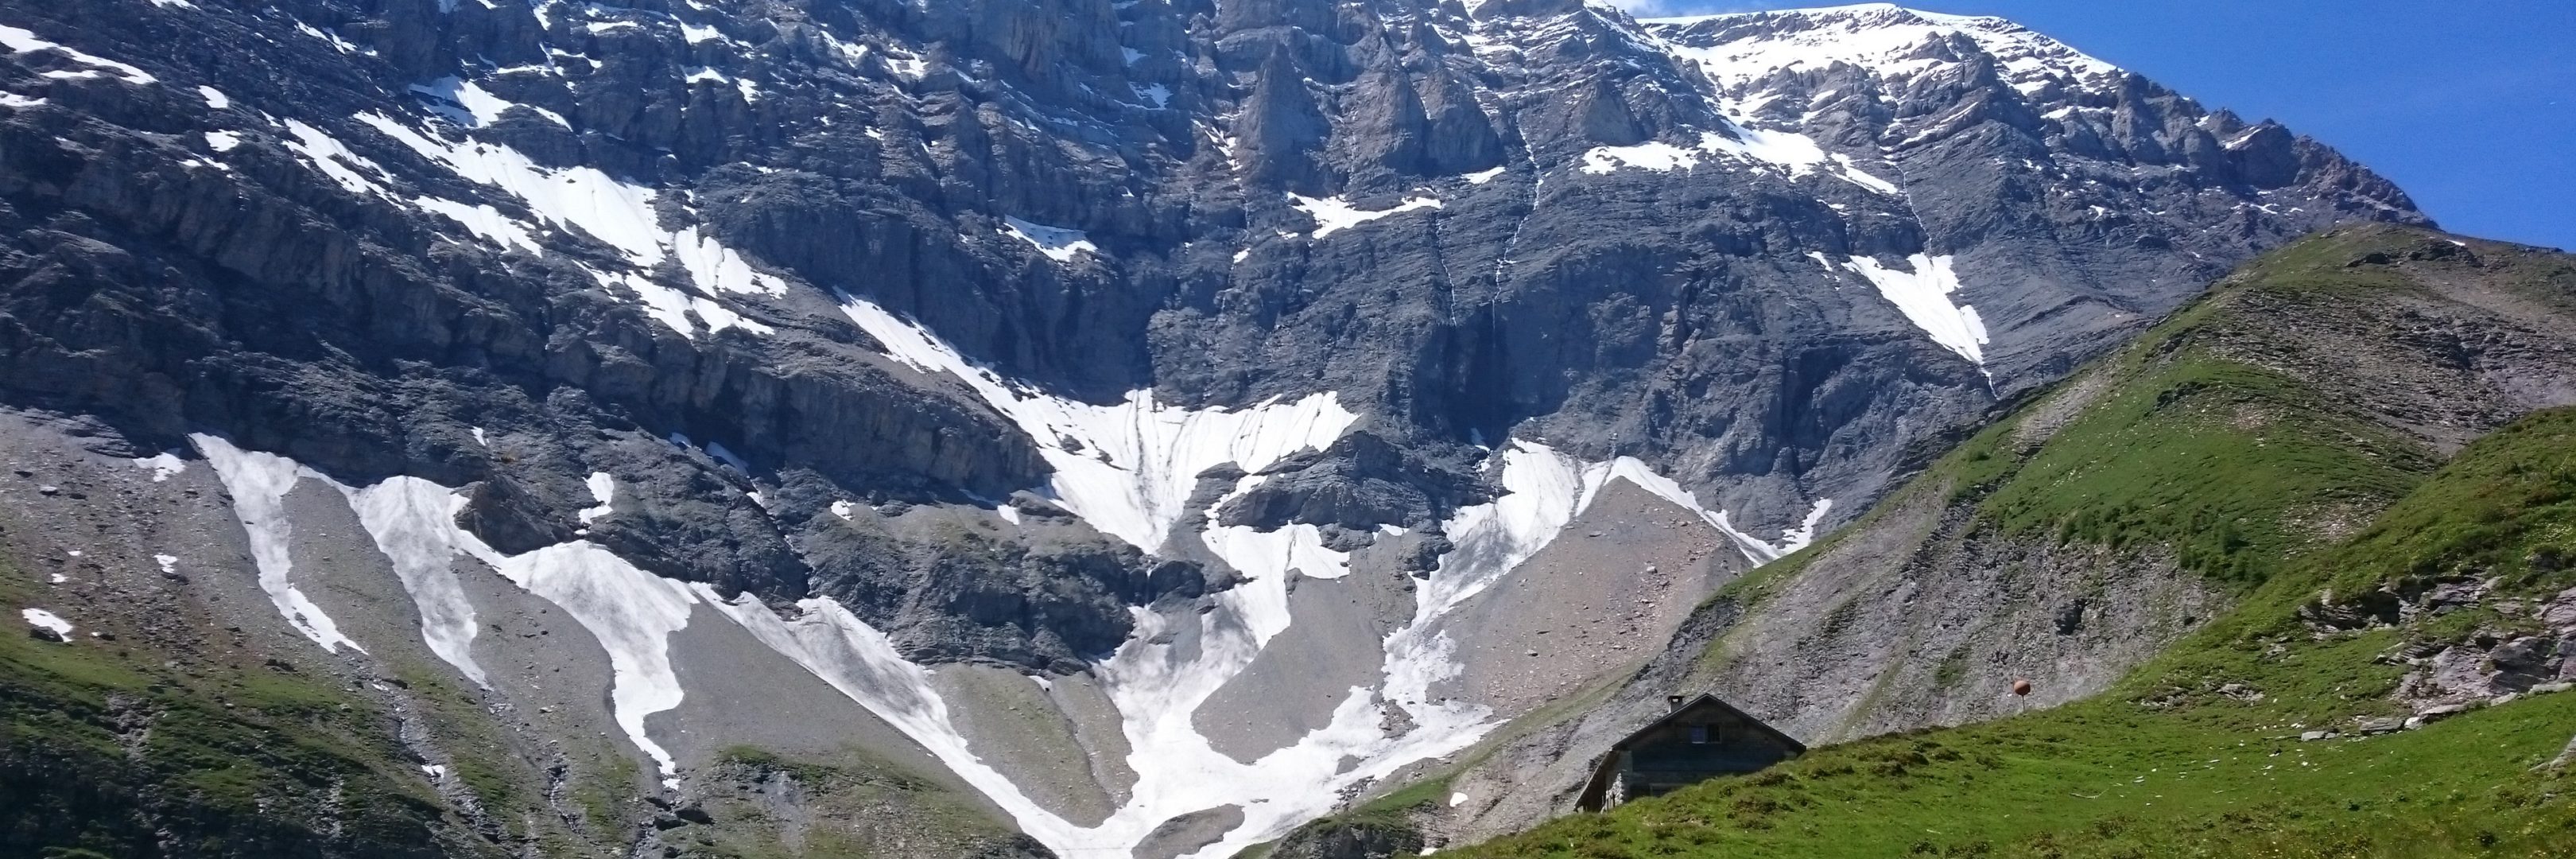 Alp Panära vor dem Ringelspitz